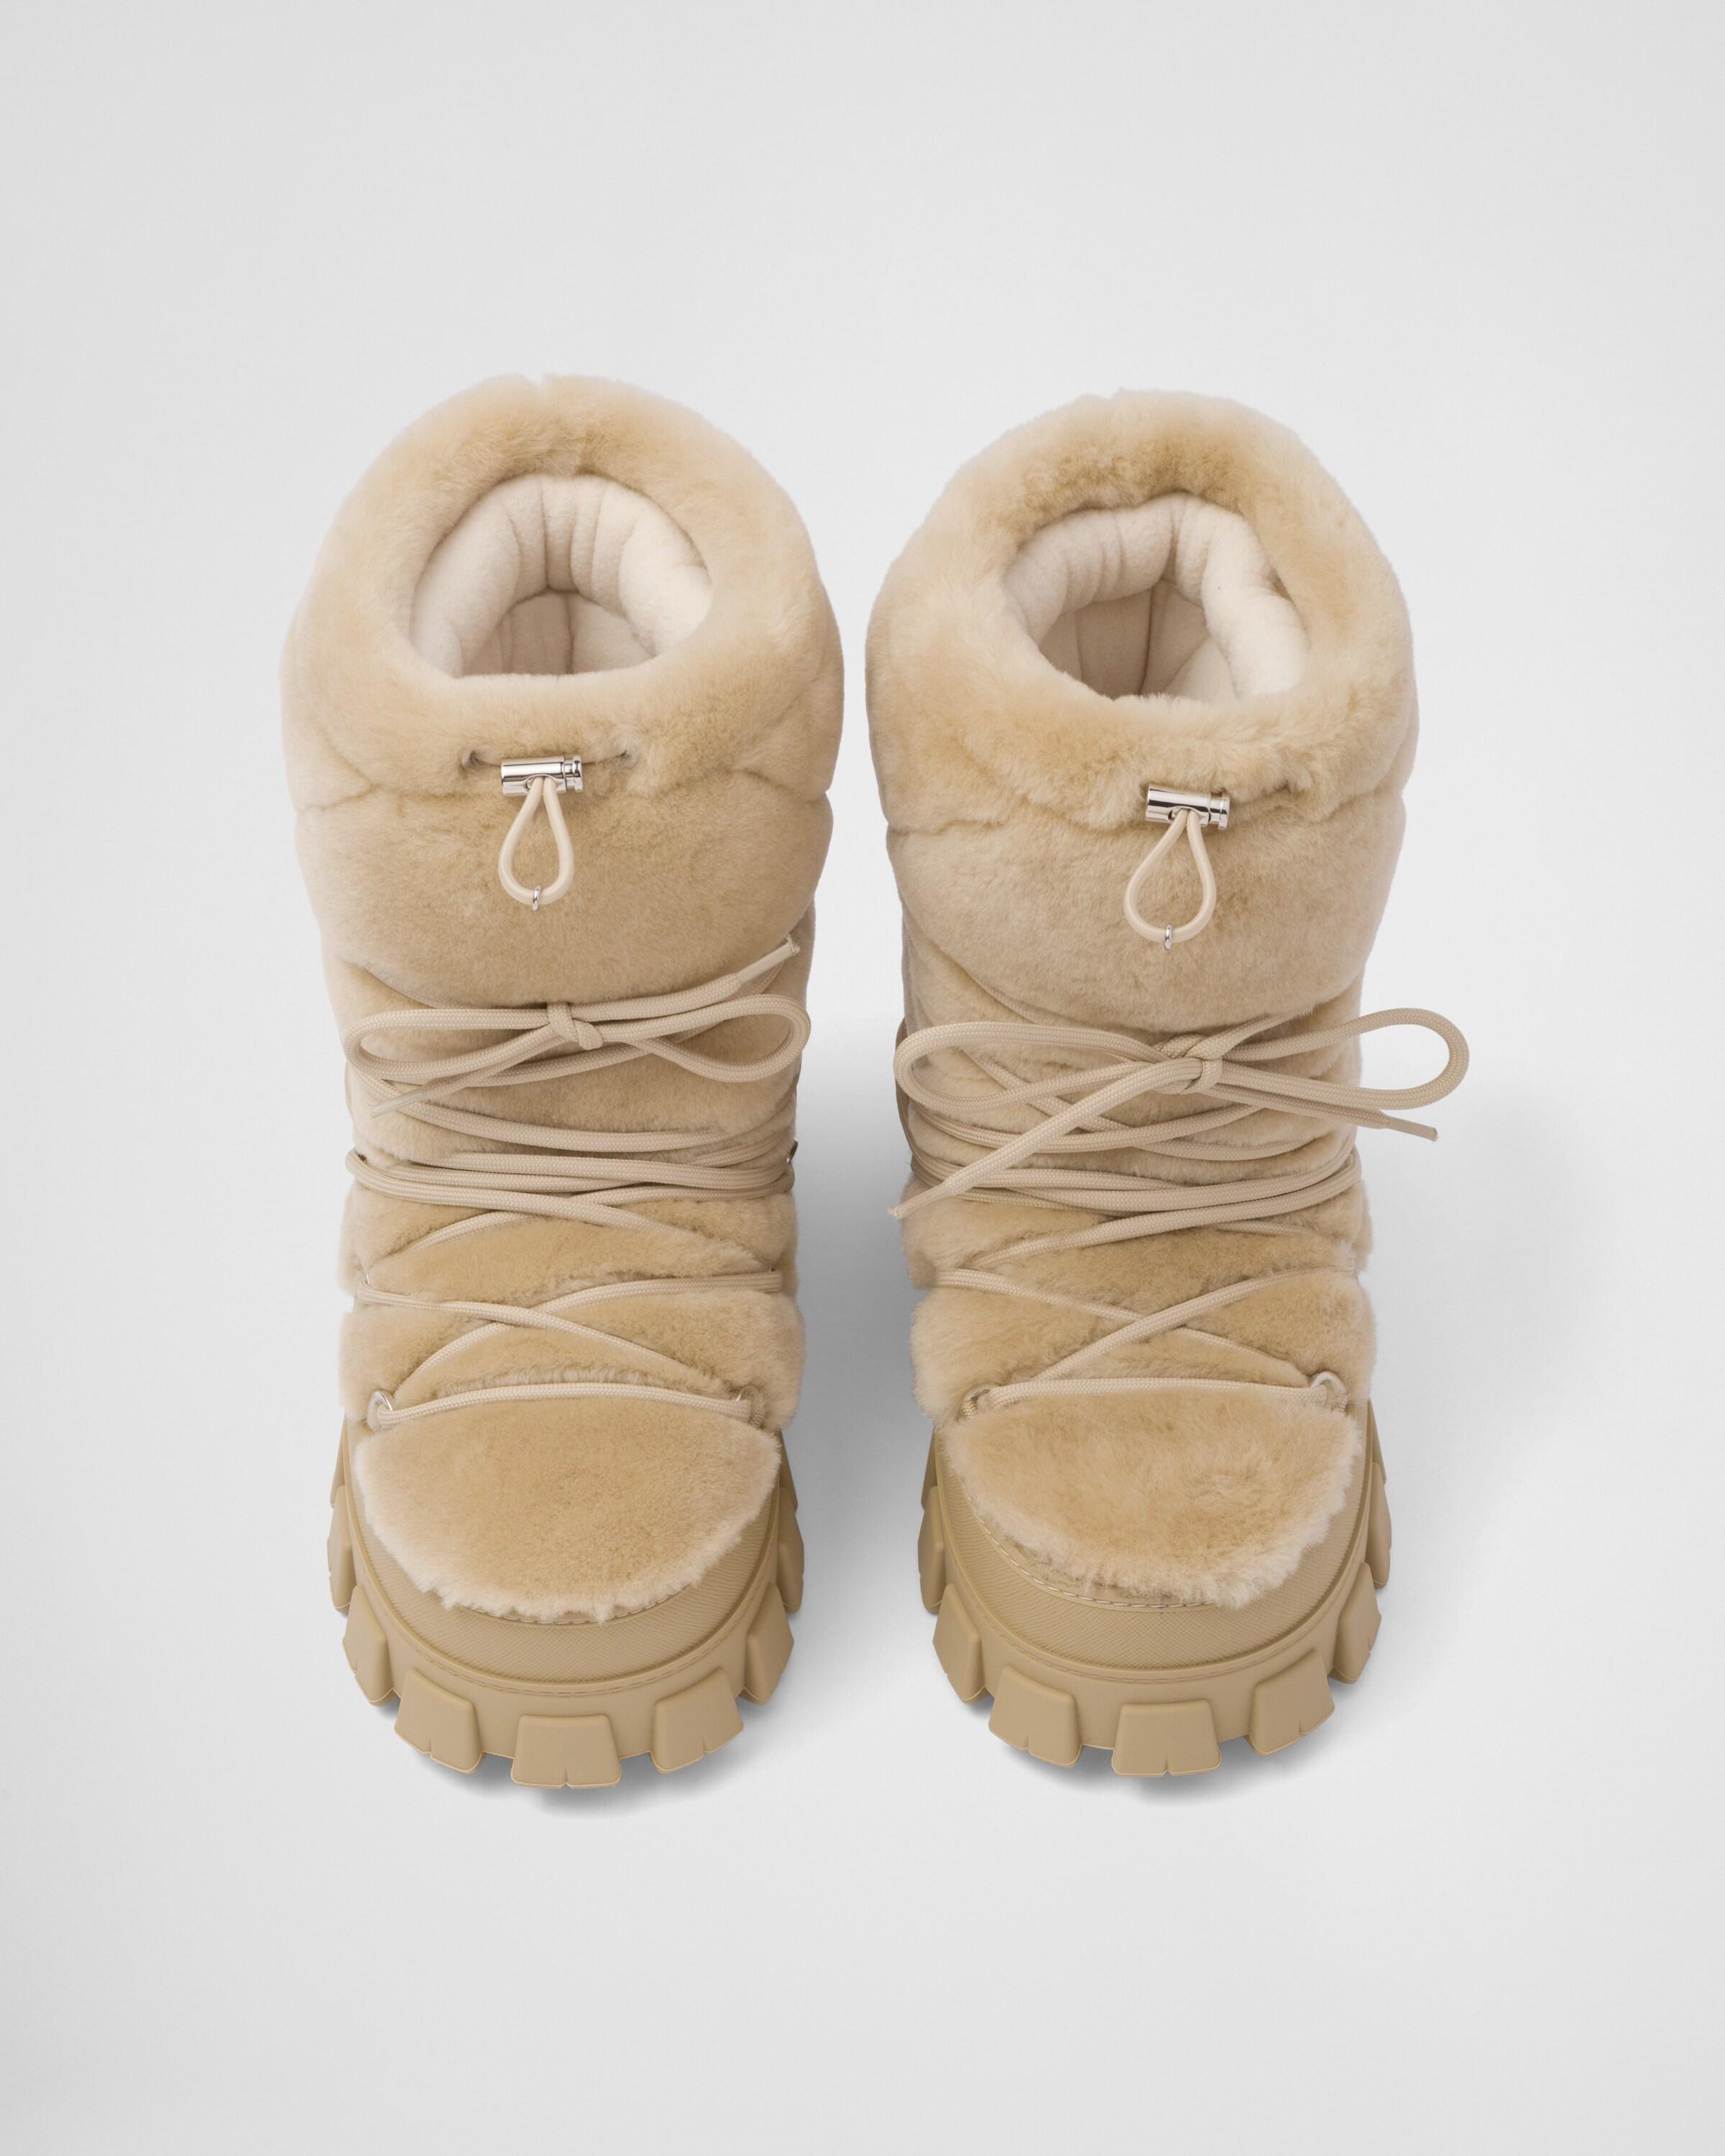 Prada Shearling Apres-ski Boots in Natural | Lyst